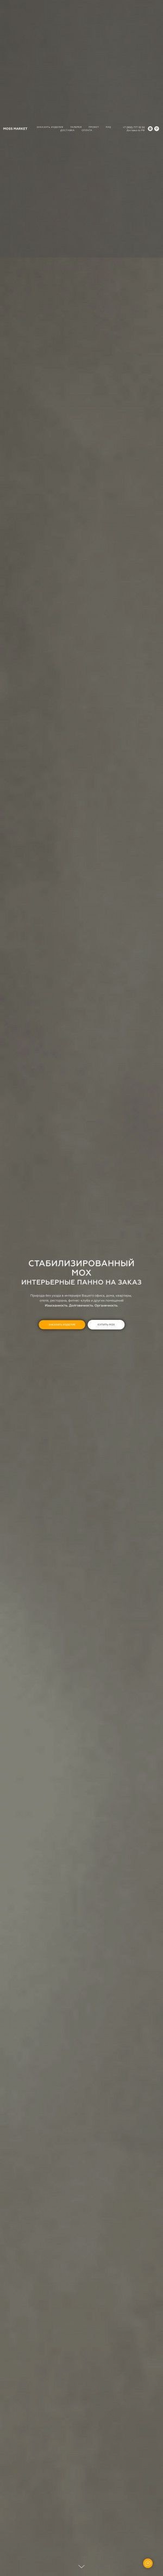 Предпросмотр для www.mossmarket.ru — Moss Market